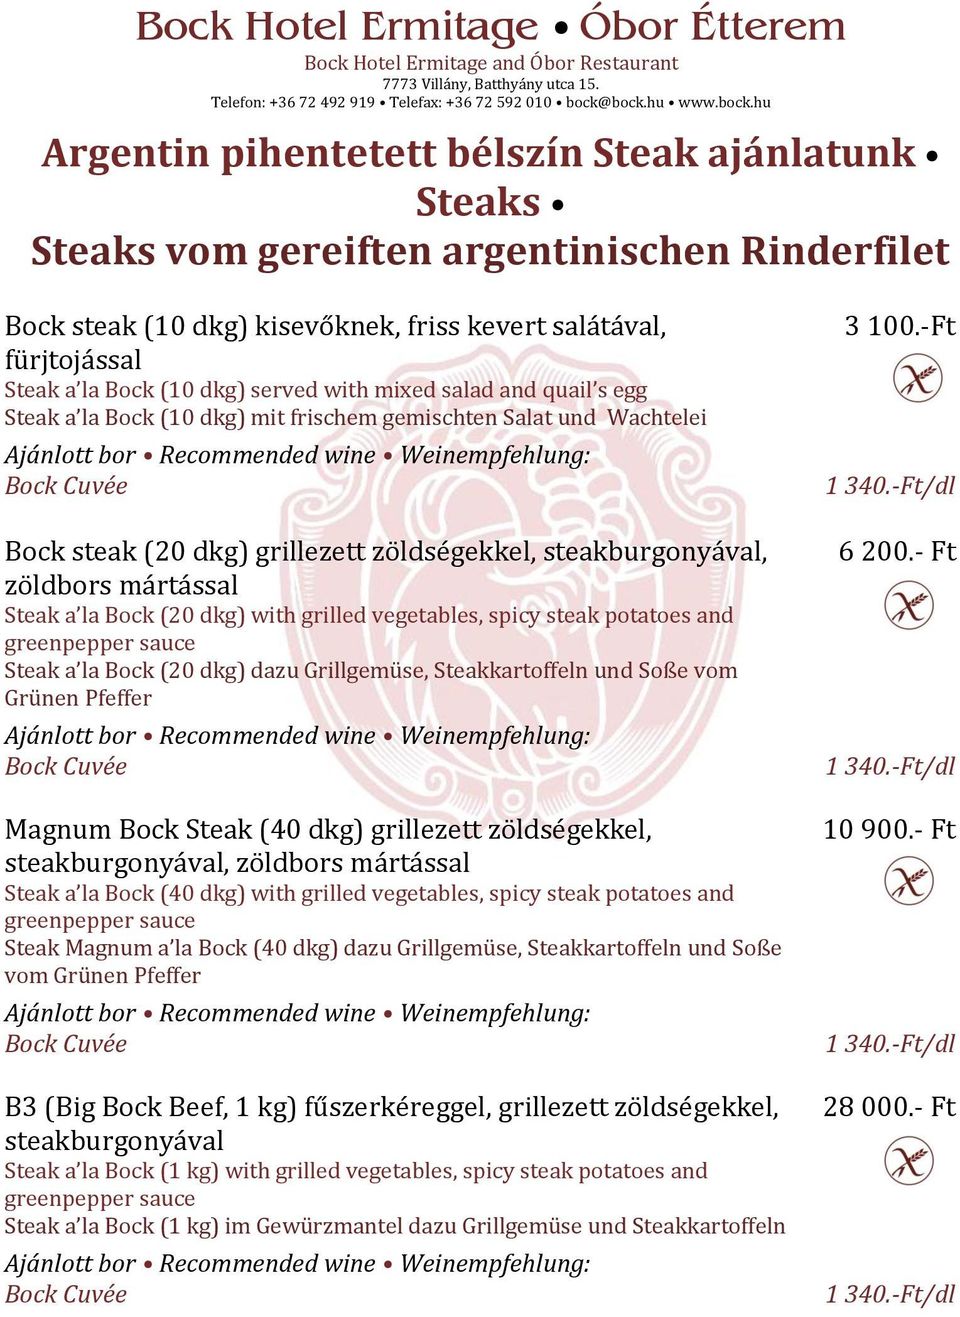 mártással Steak a la Bock (20 dkg) with grilled vegetables, spicy steak potatoes and greenpepper sauce Steak a la Bock (20 dkg) dazu Grillgemüse, Steakkartoffeln und Soße vom Grünen Pfeffer Bock